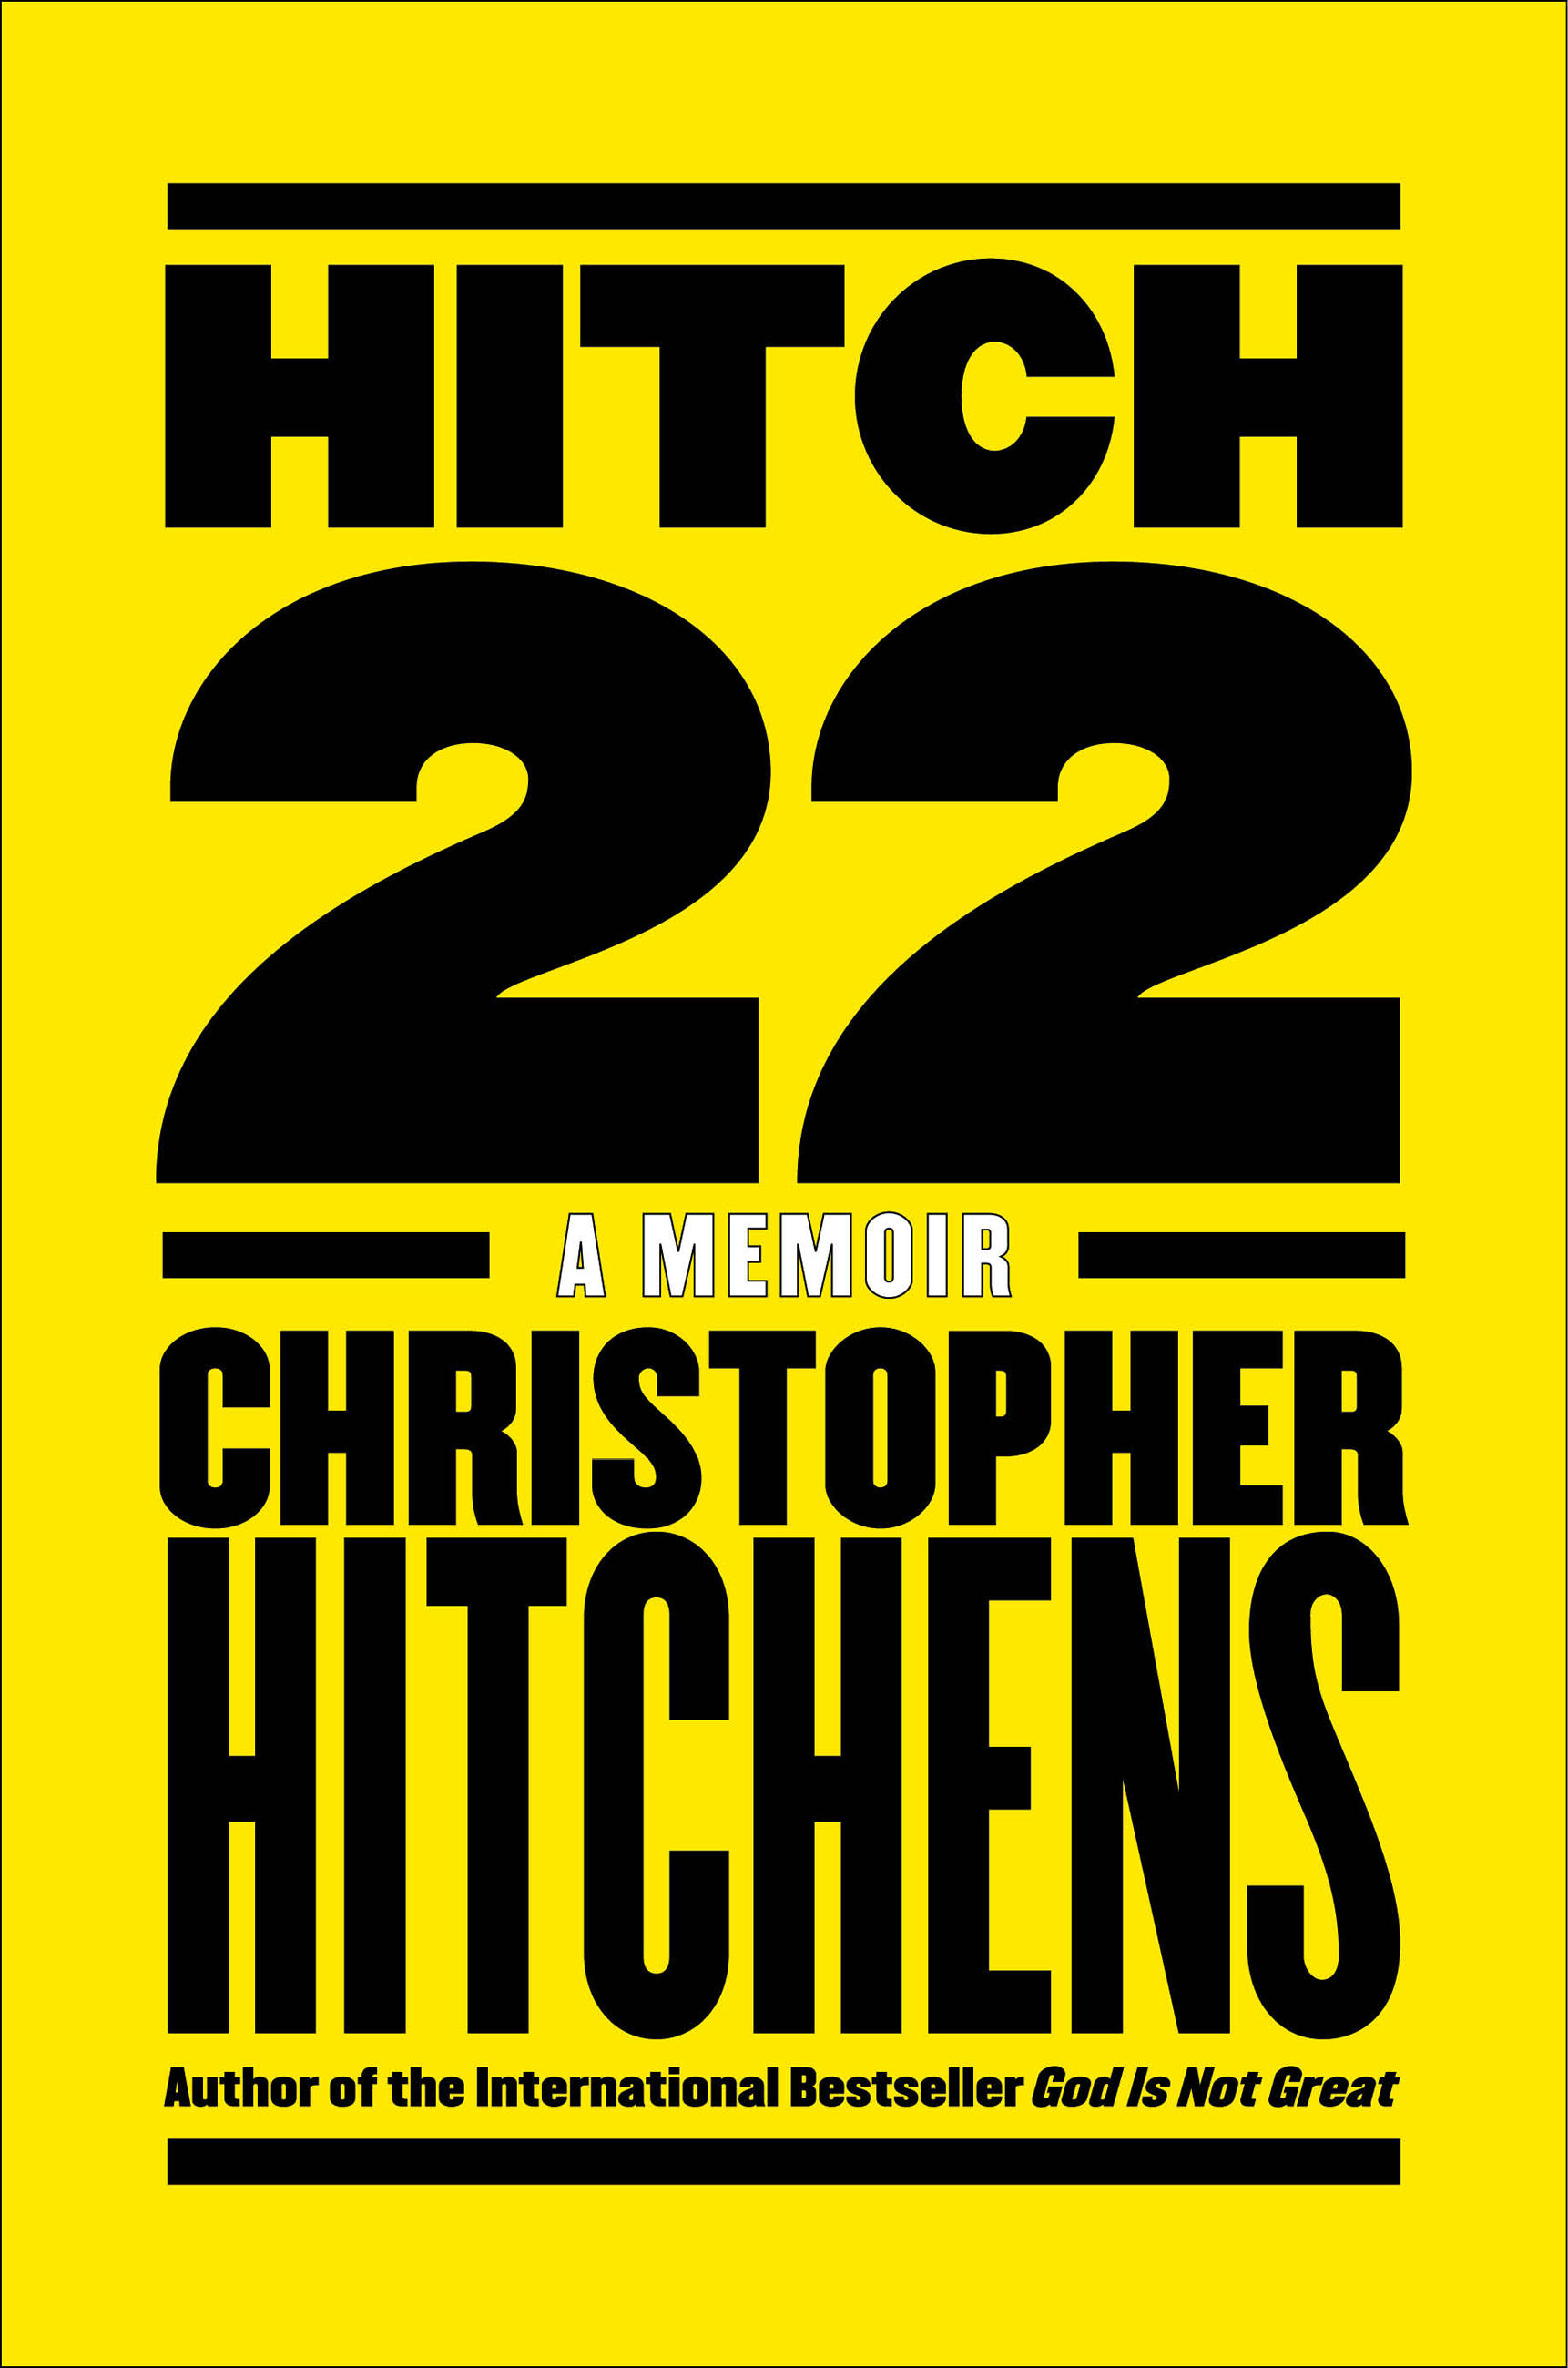 Hitch-22 - 10-14.99